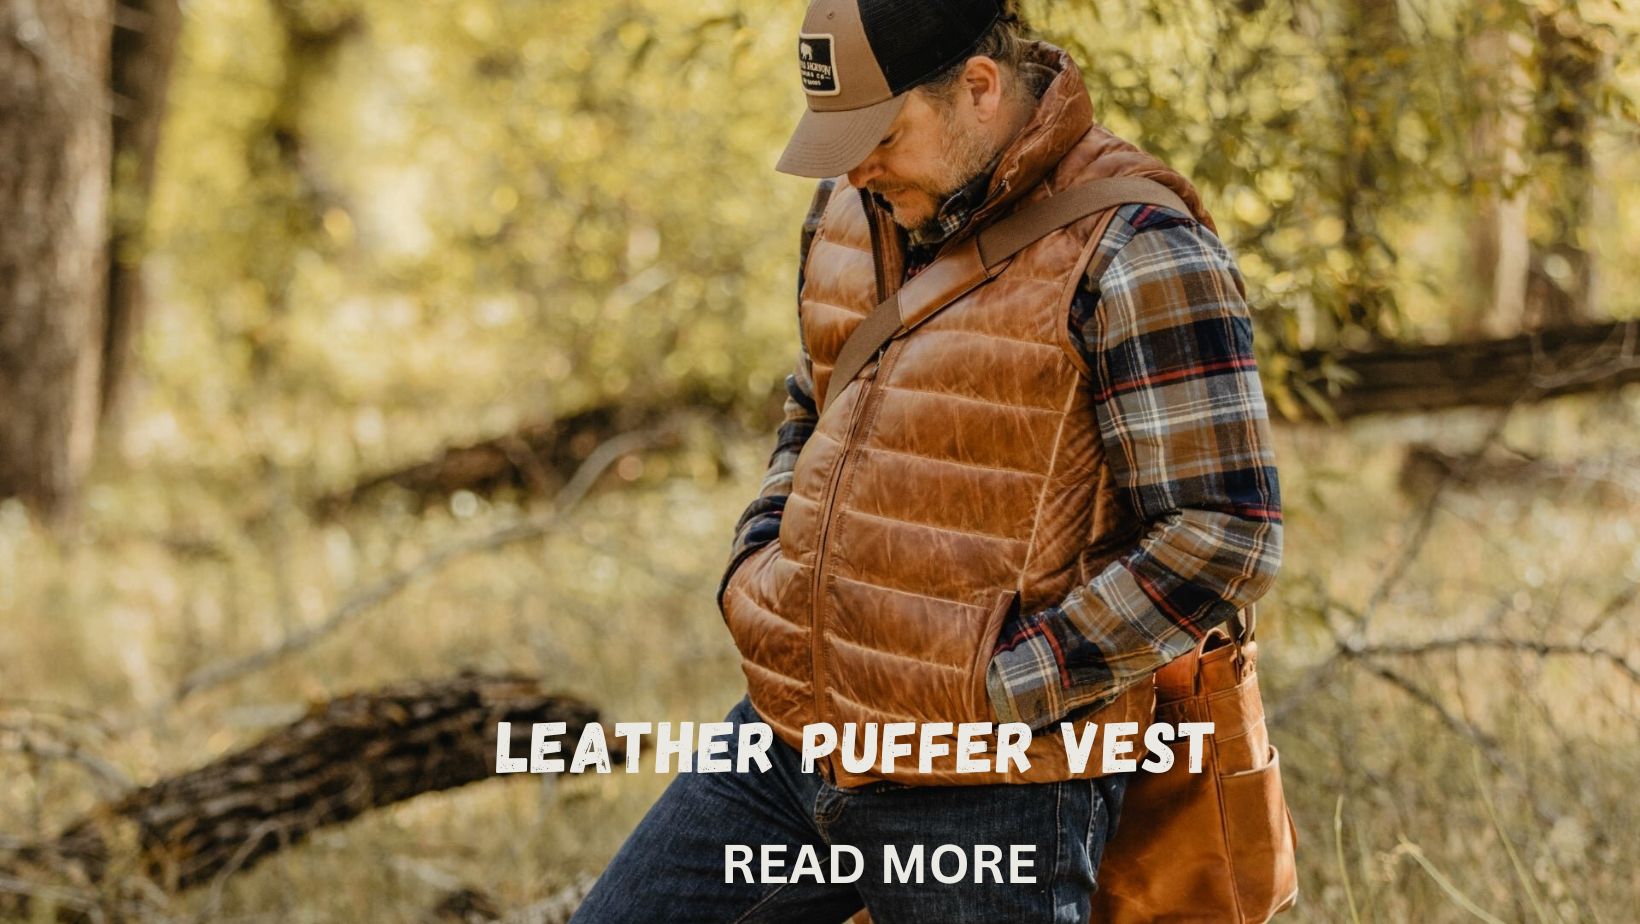 Leather puffer vest stylish